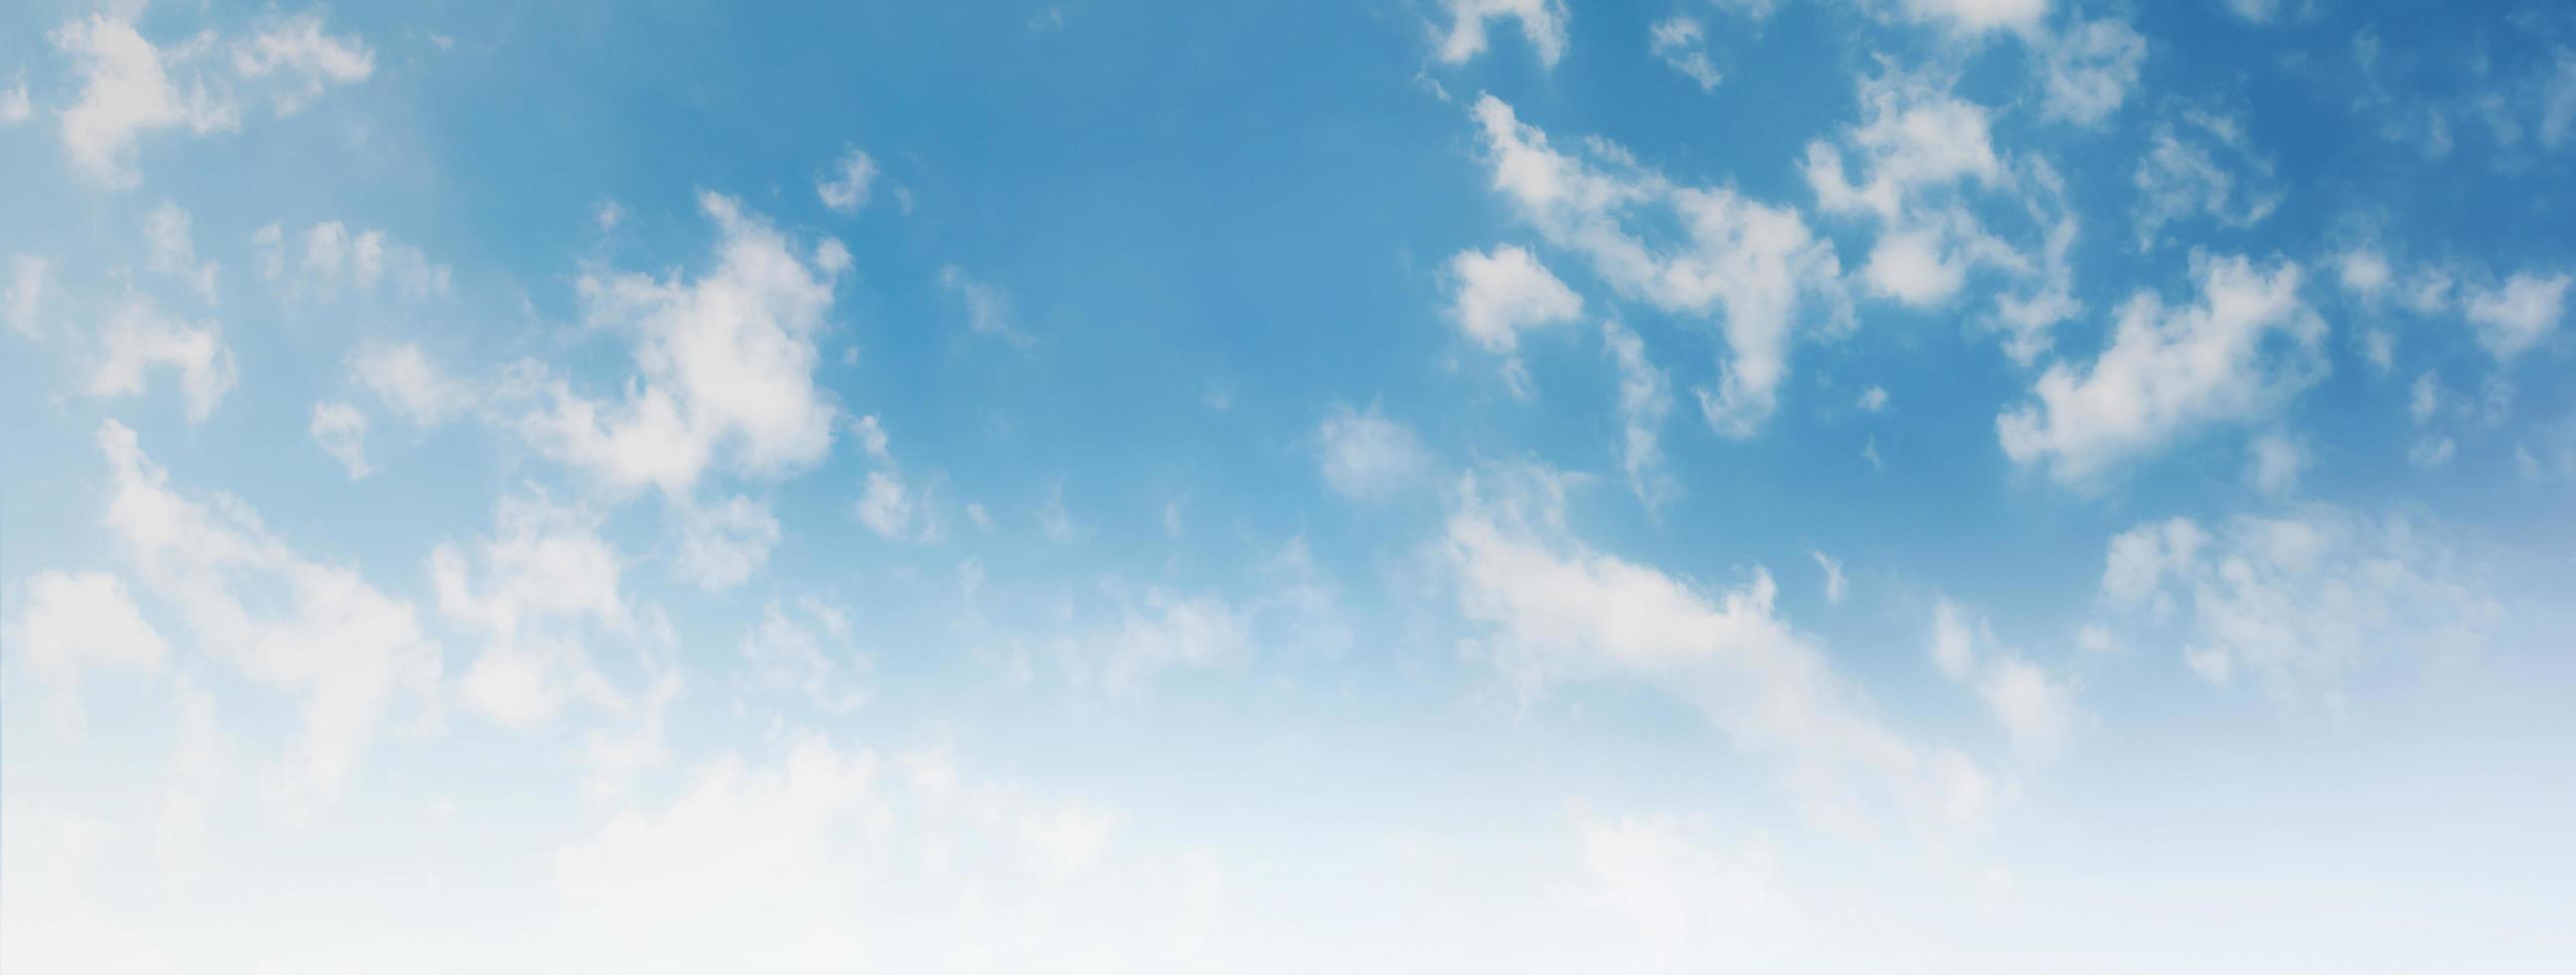 panorama bianca nube e blu cielo sfondo foto